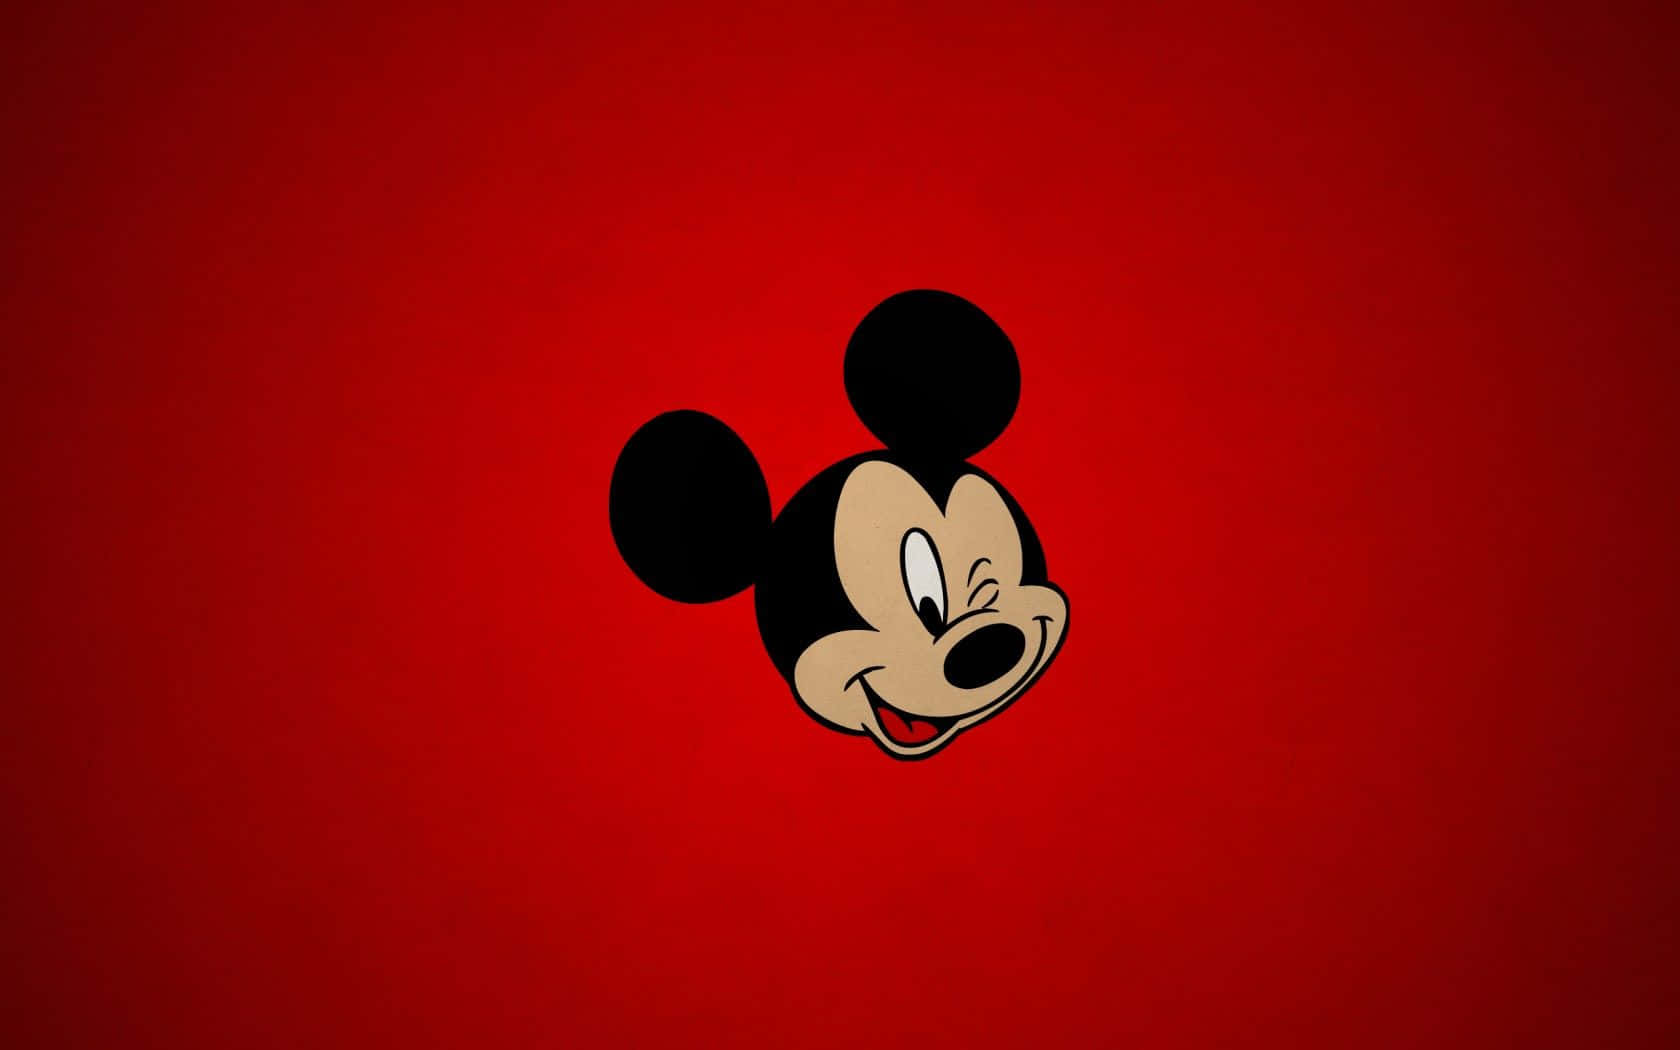 Et sødt Mickey Mouse-tegnefilm viser den glade figur smilende strålende. Wallpaper